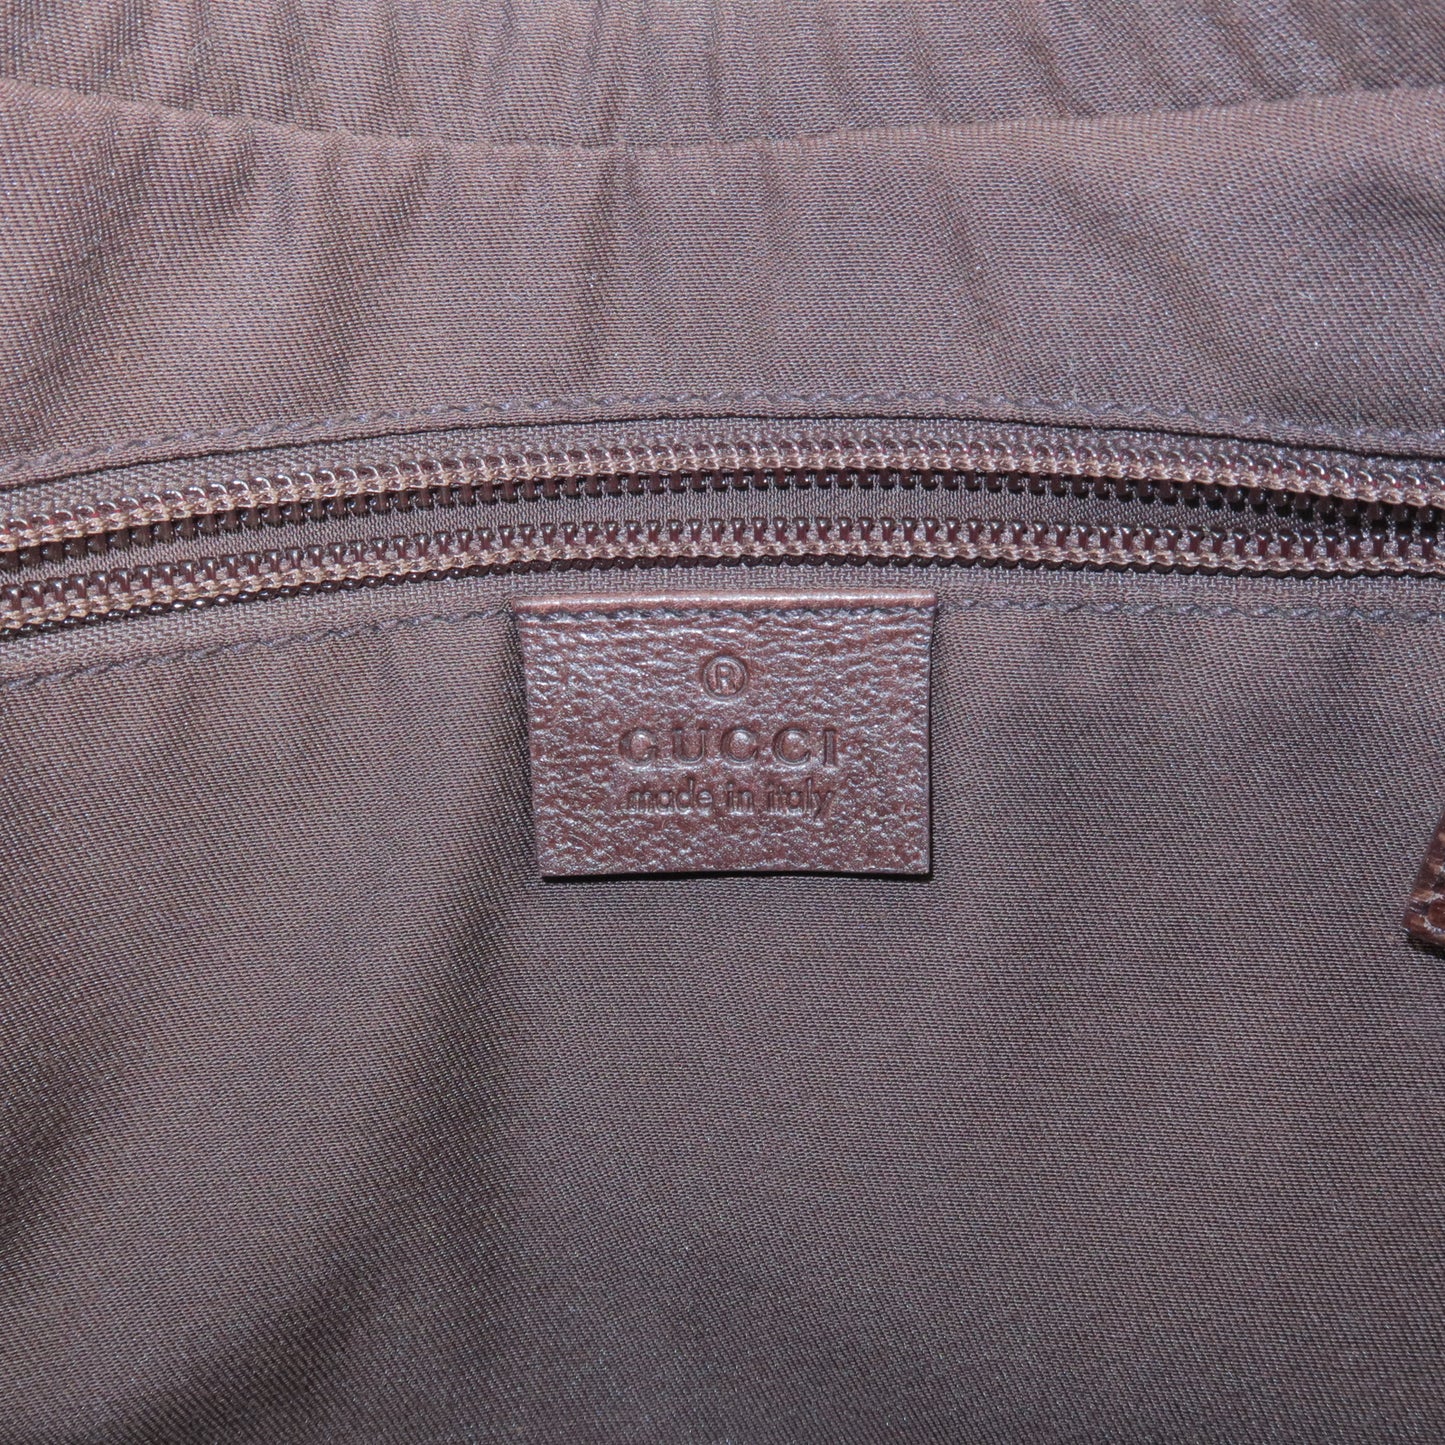 GUCCI-Sherry-GG-Canvas-Leather-Shoulder-Bag-Beige-Brown-122790